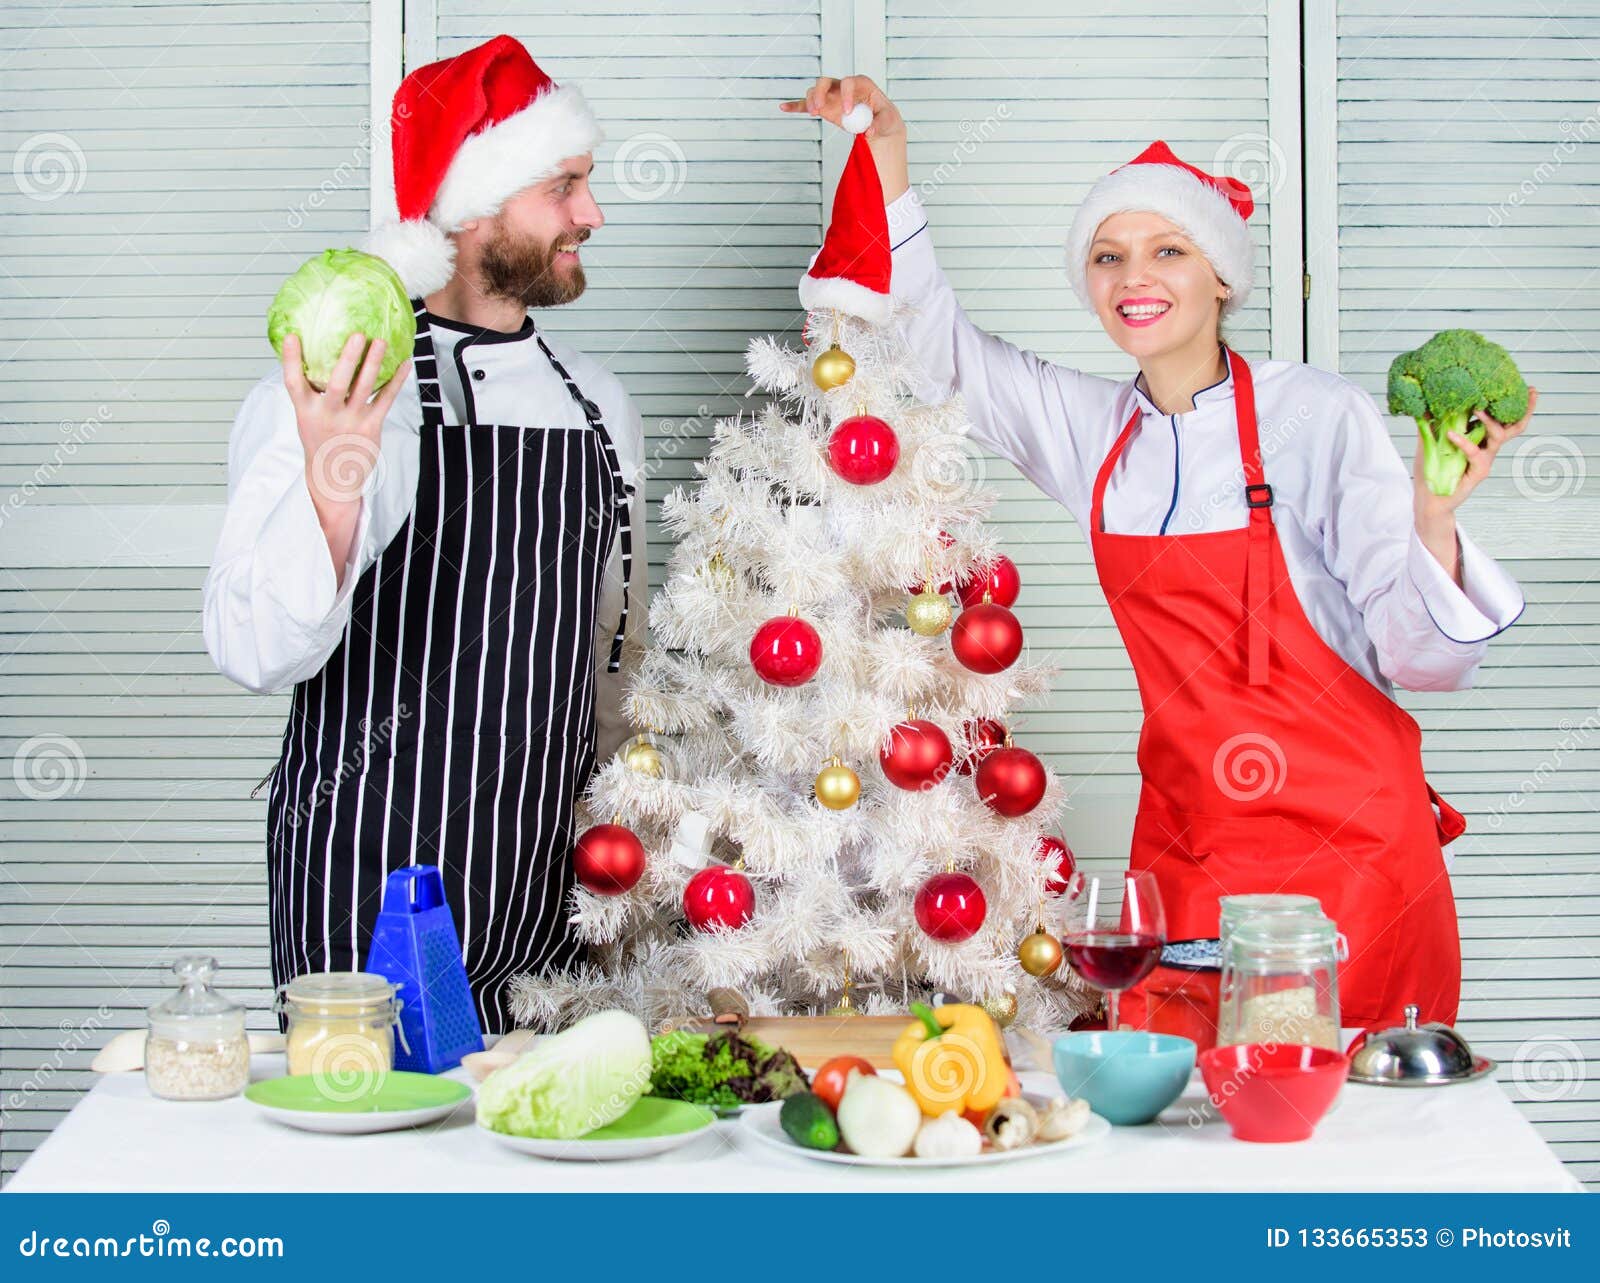 Cooking Christmas Meal. Man and Woman Chef Santa Hat Near Christmas ...